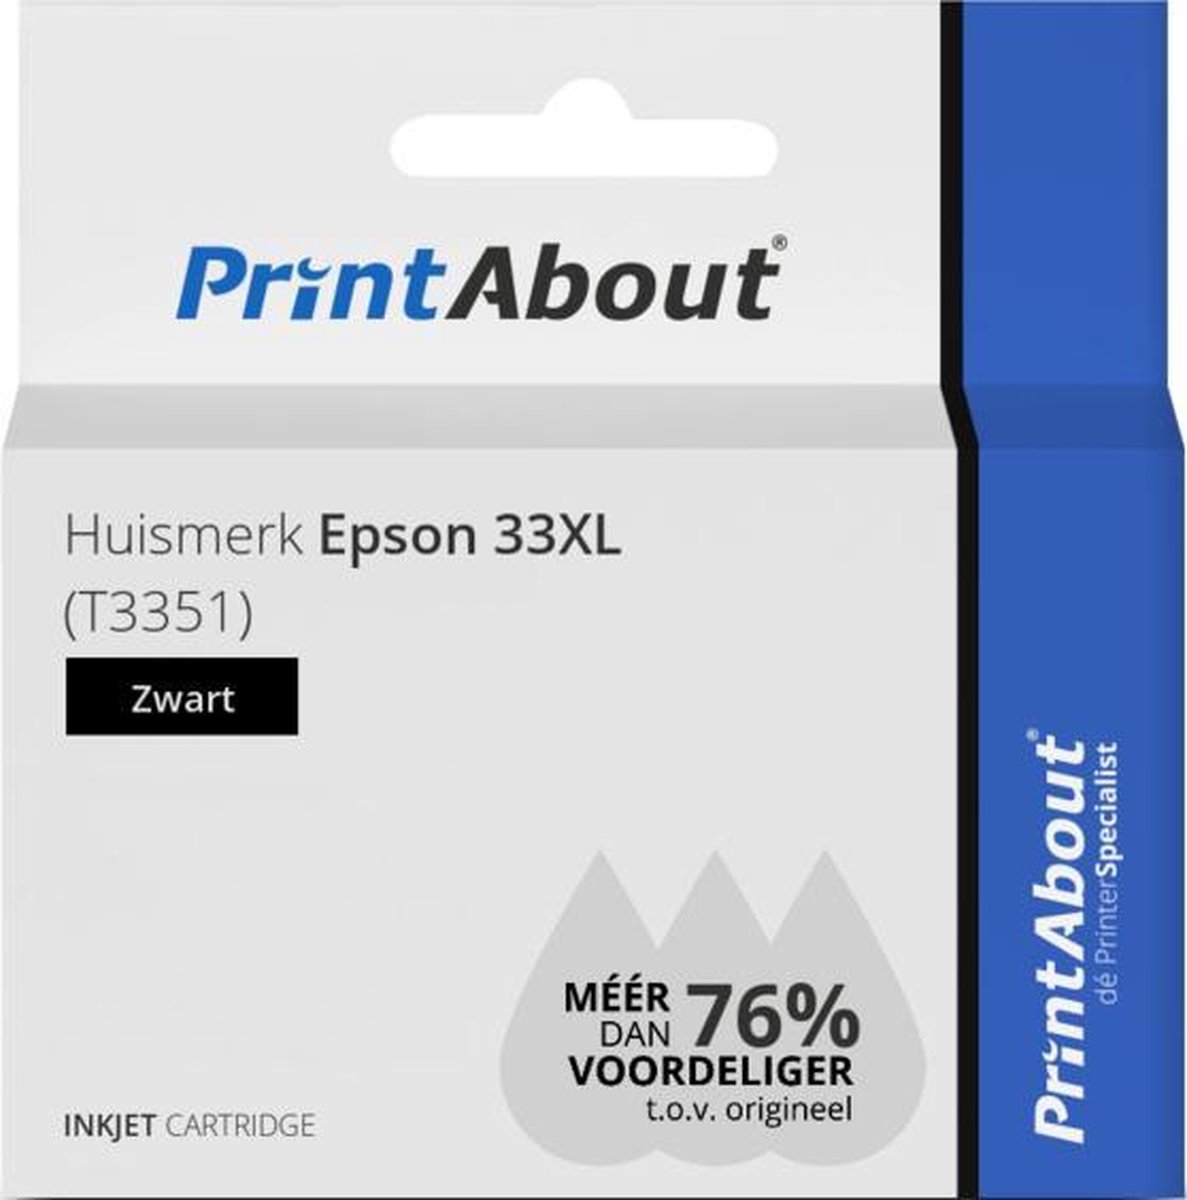 PrintAbout Epson 33XL (T3351) inkjet Huismerk - Zwart